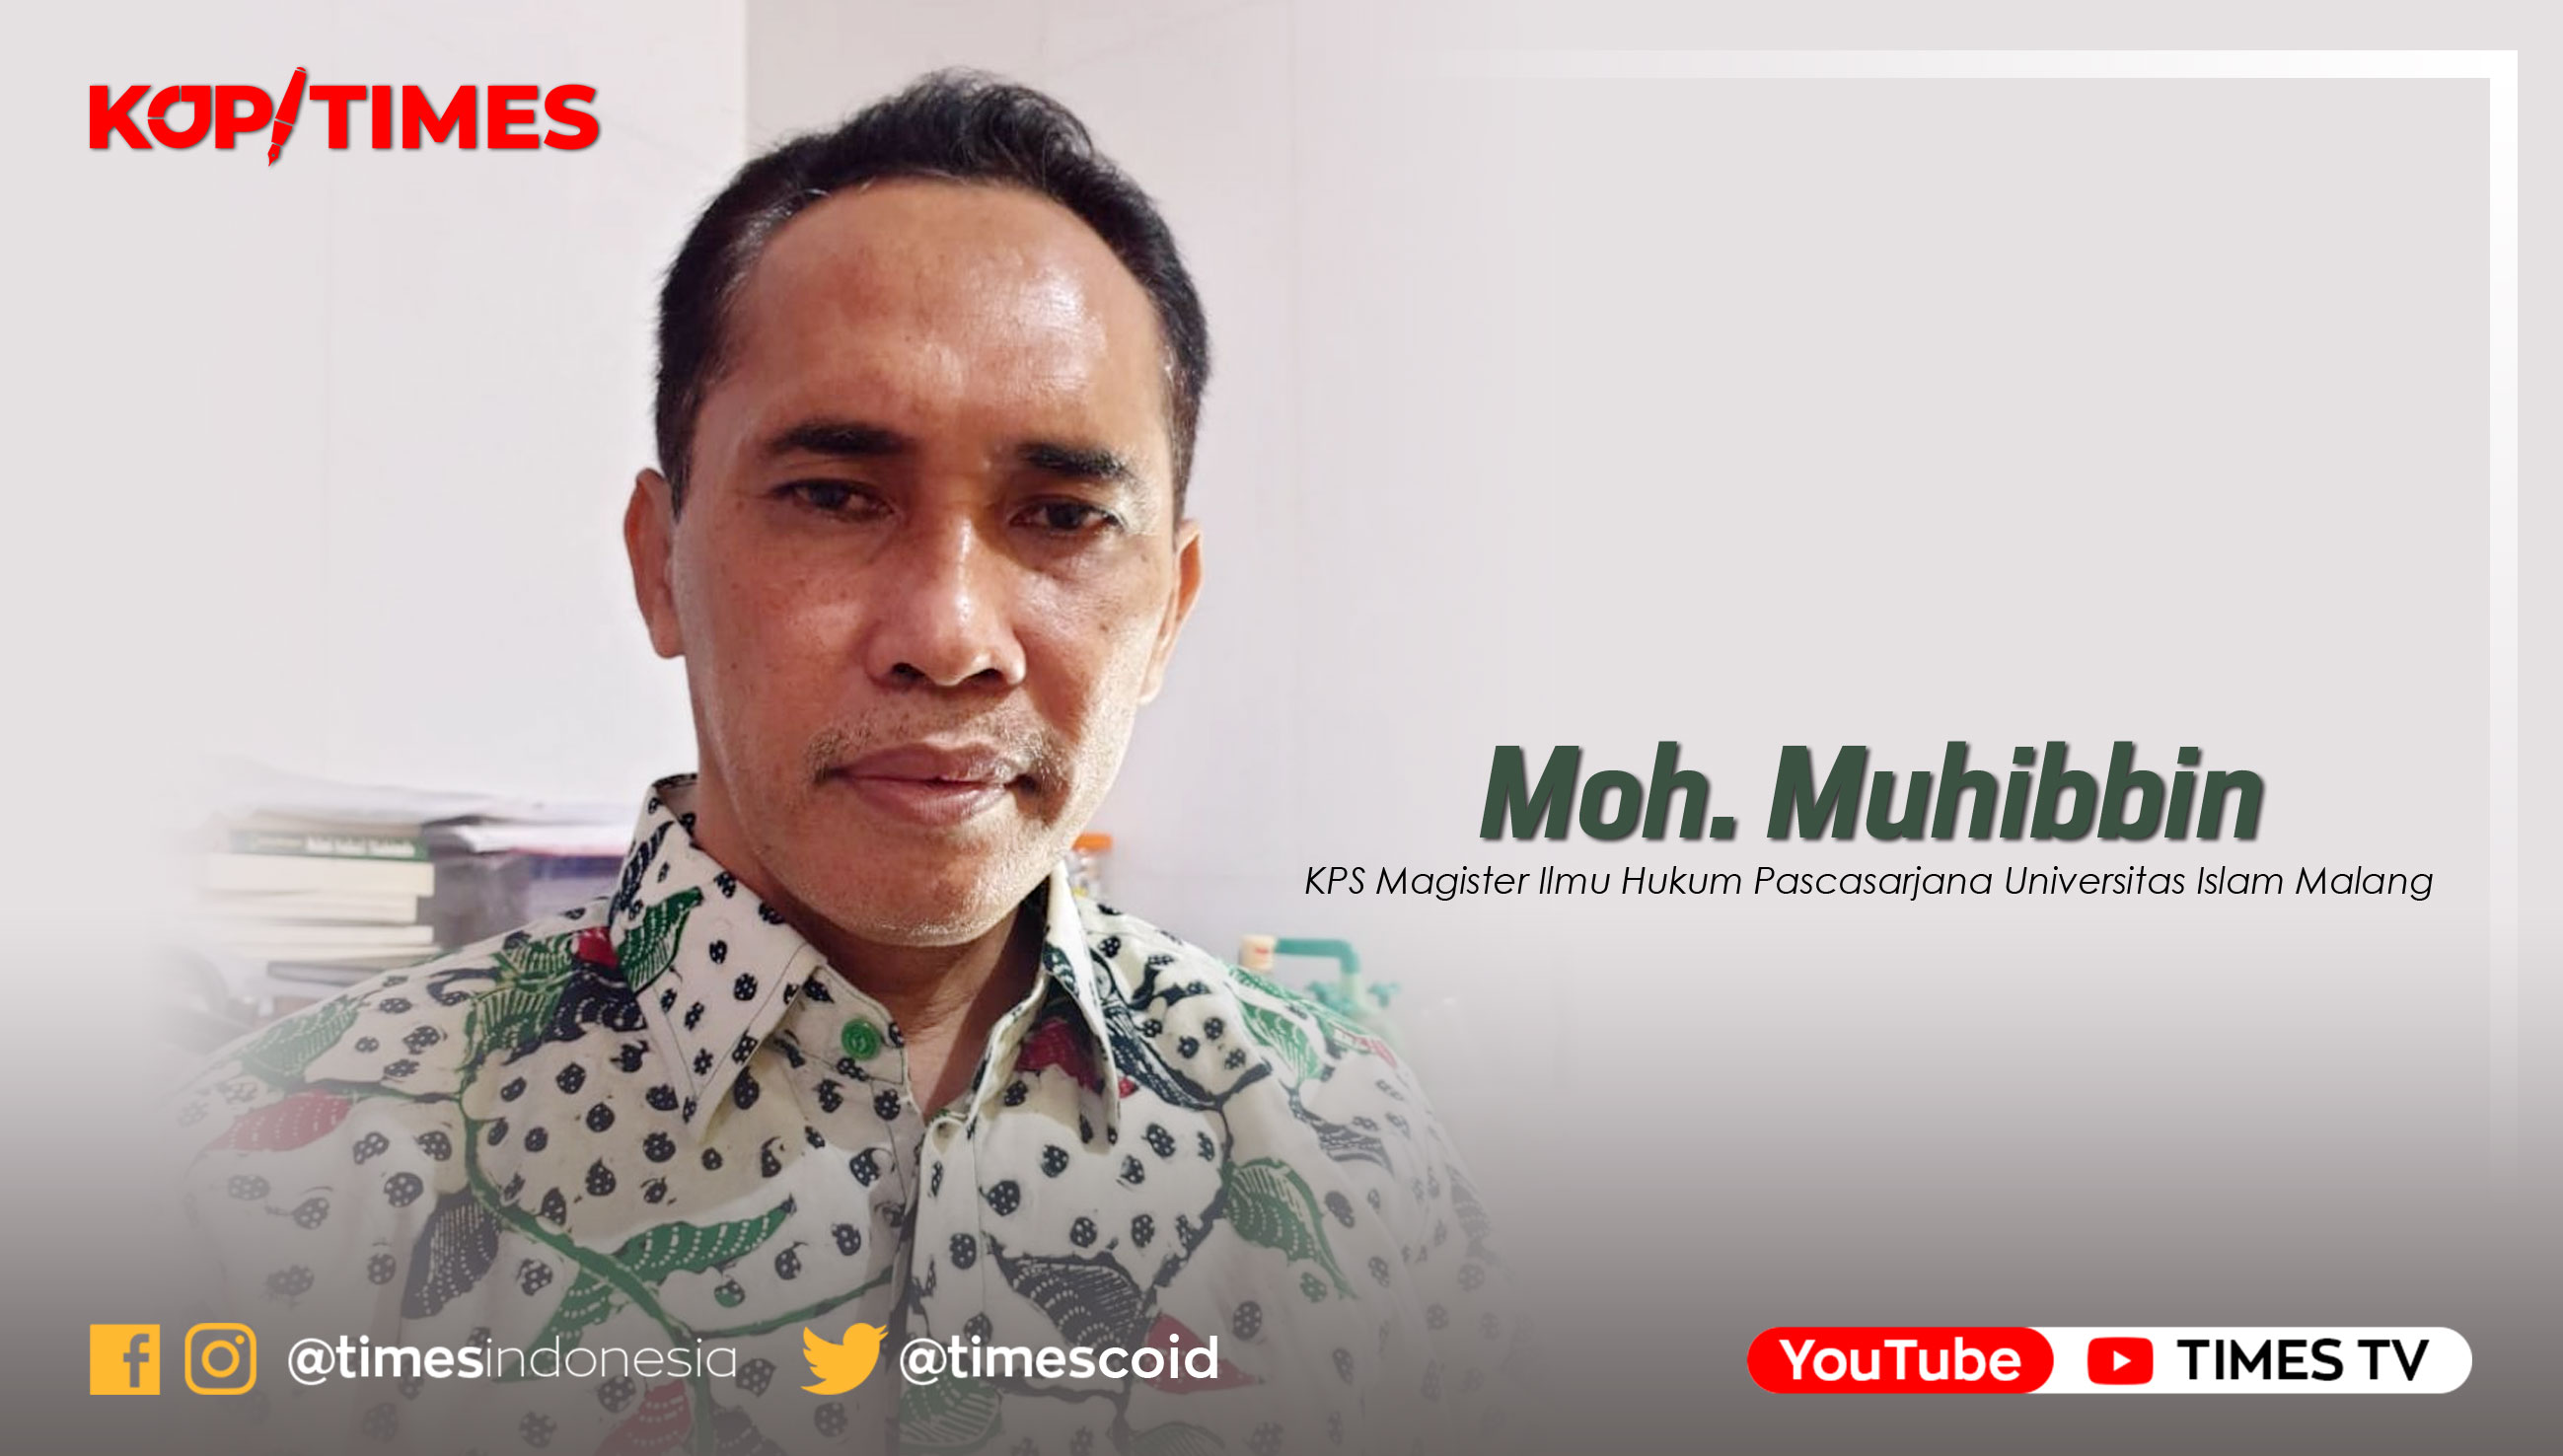 Moh. Muhibbin, Peneliti dan KPS Program Studi Magister Ilmu Hukum Pascasarjana, Universitas Islam Malang (UNISMA).